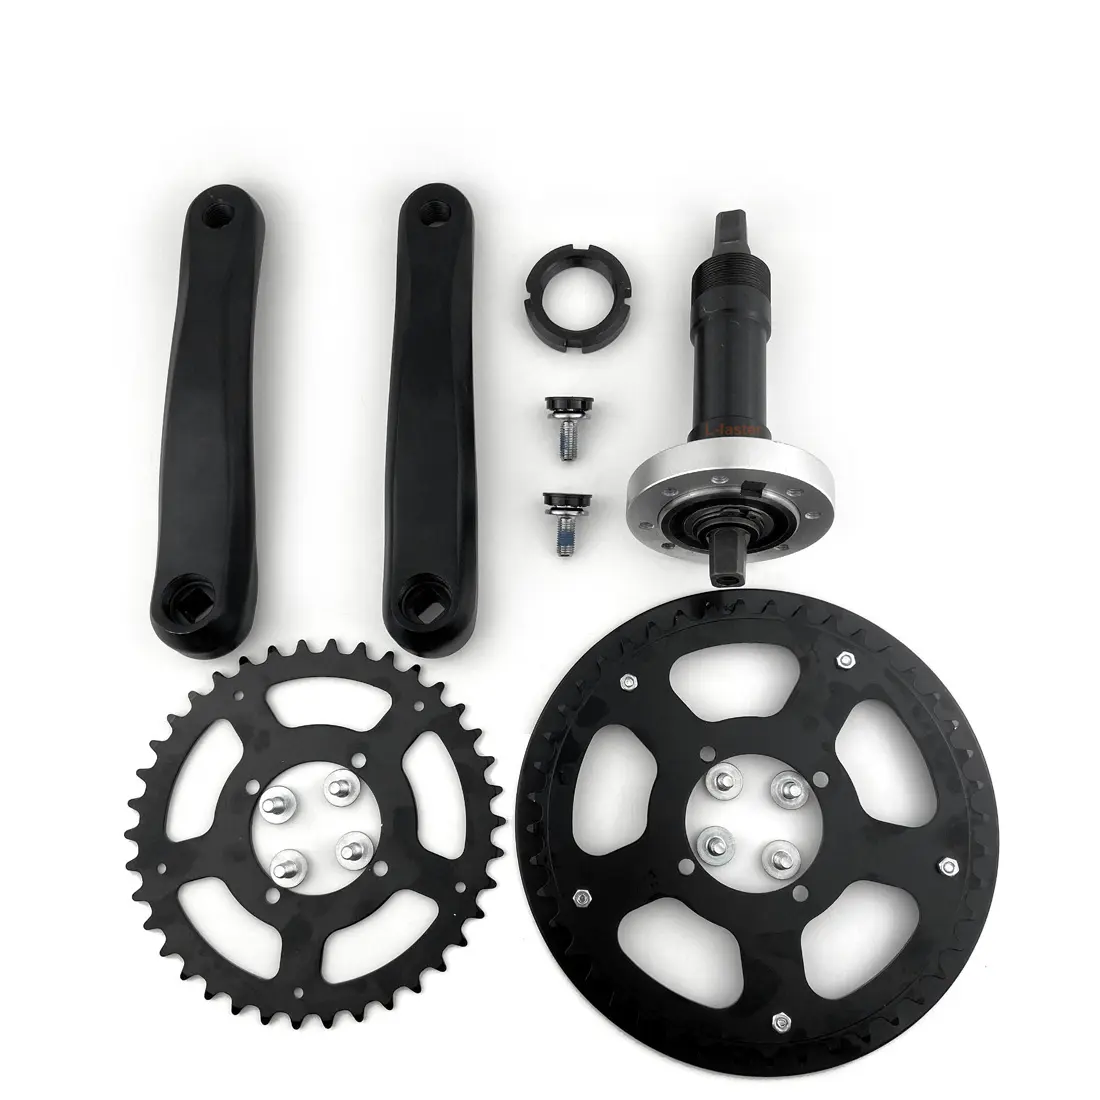 L-faster Freewheel Crankset For Electric Bike Mid-drive Kit 68mm to 73mm Bottom Bracket